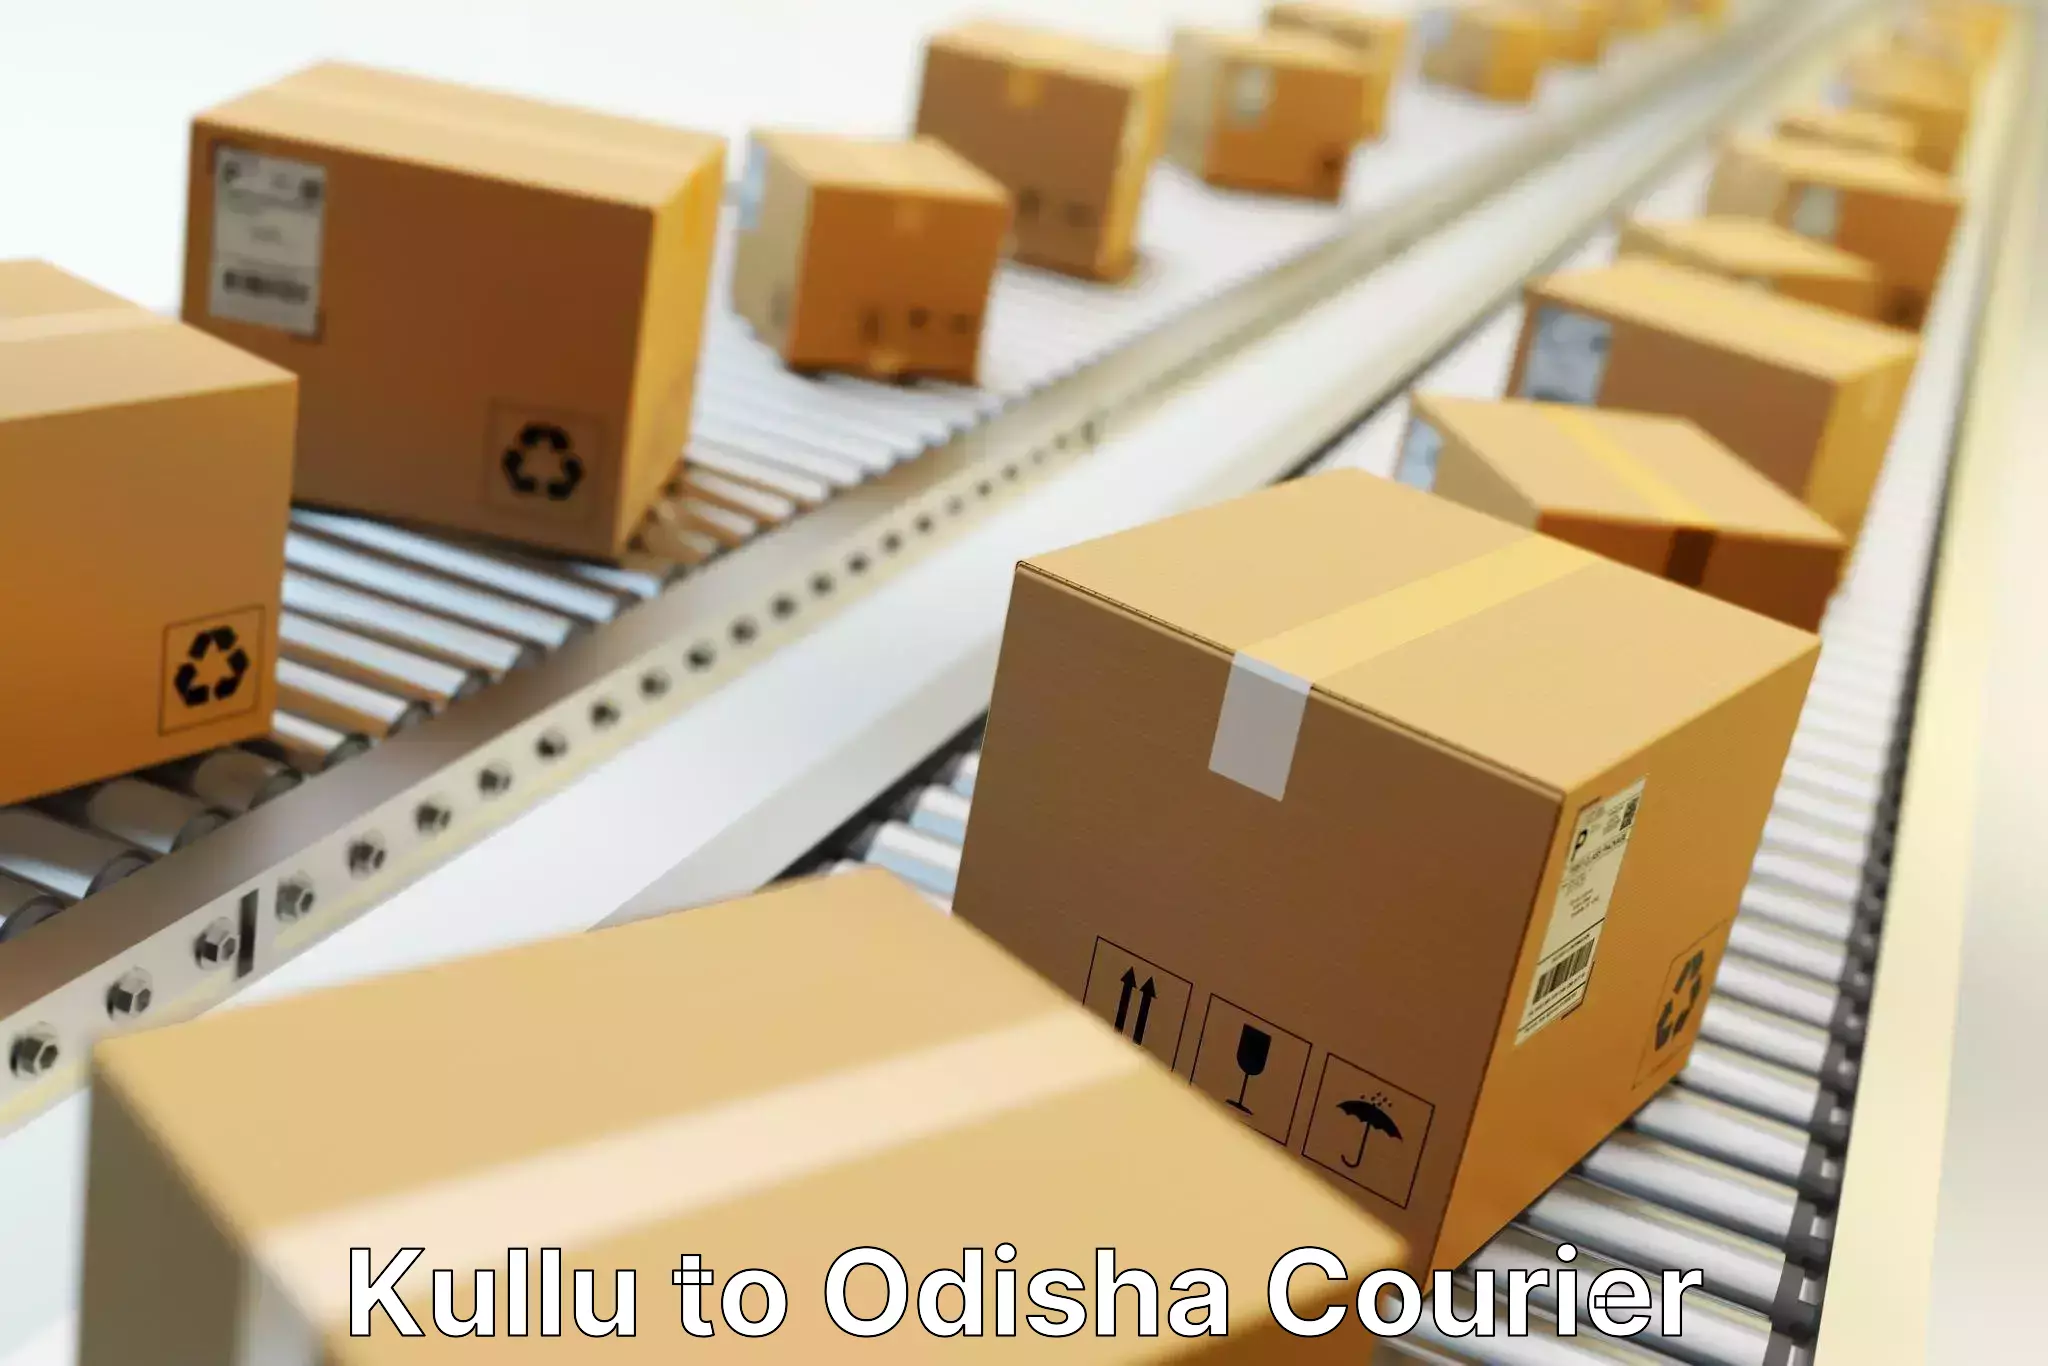 Logistics service provider Kullu to Asika